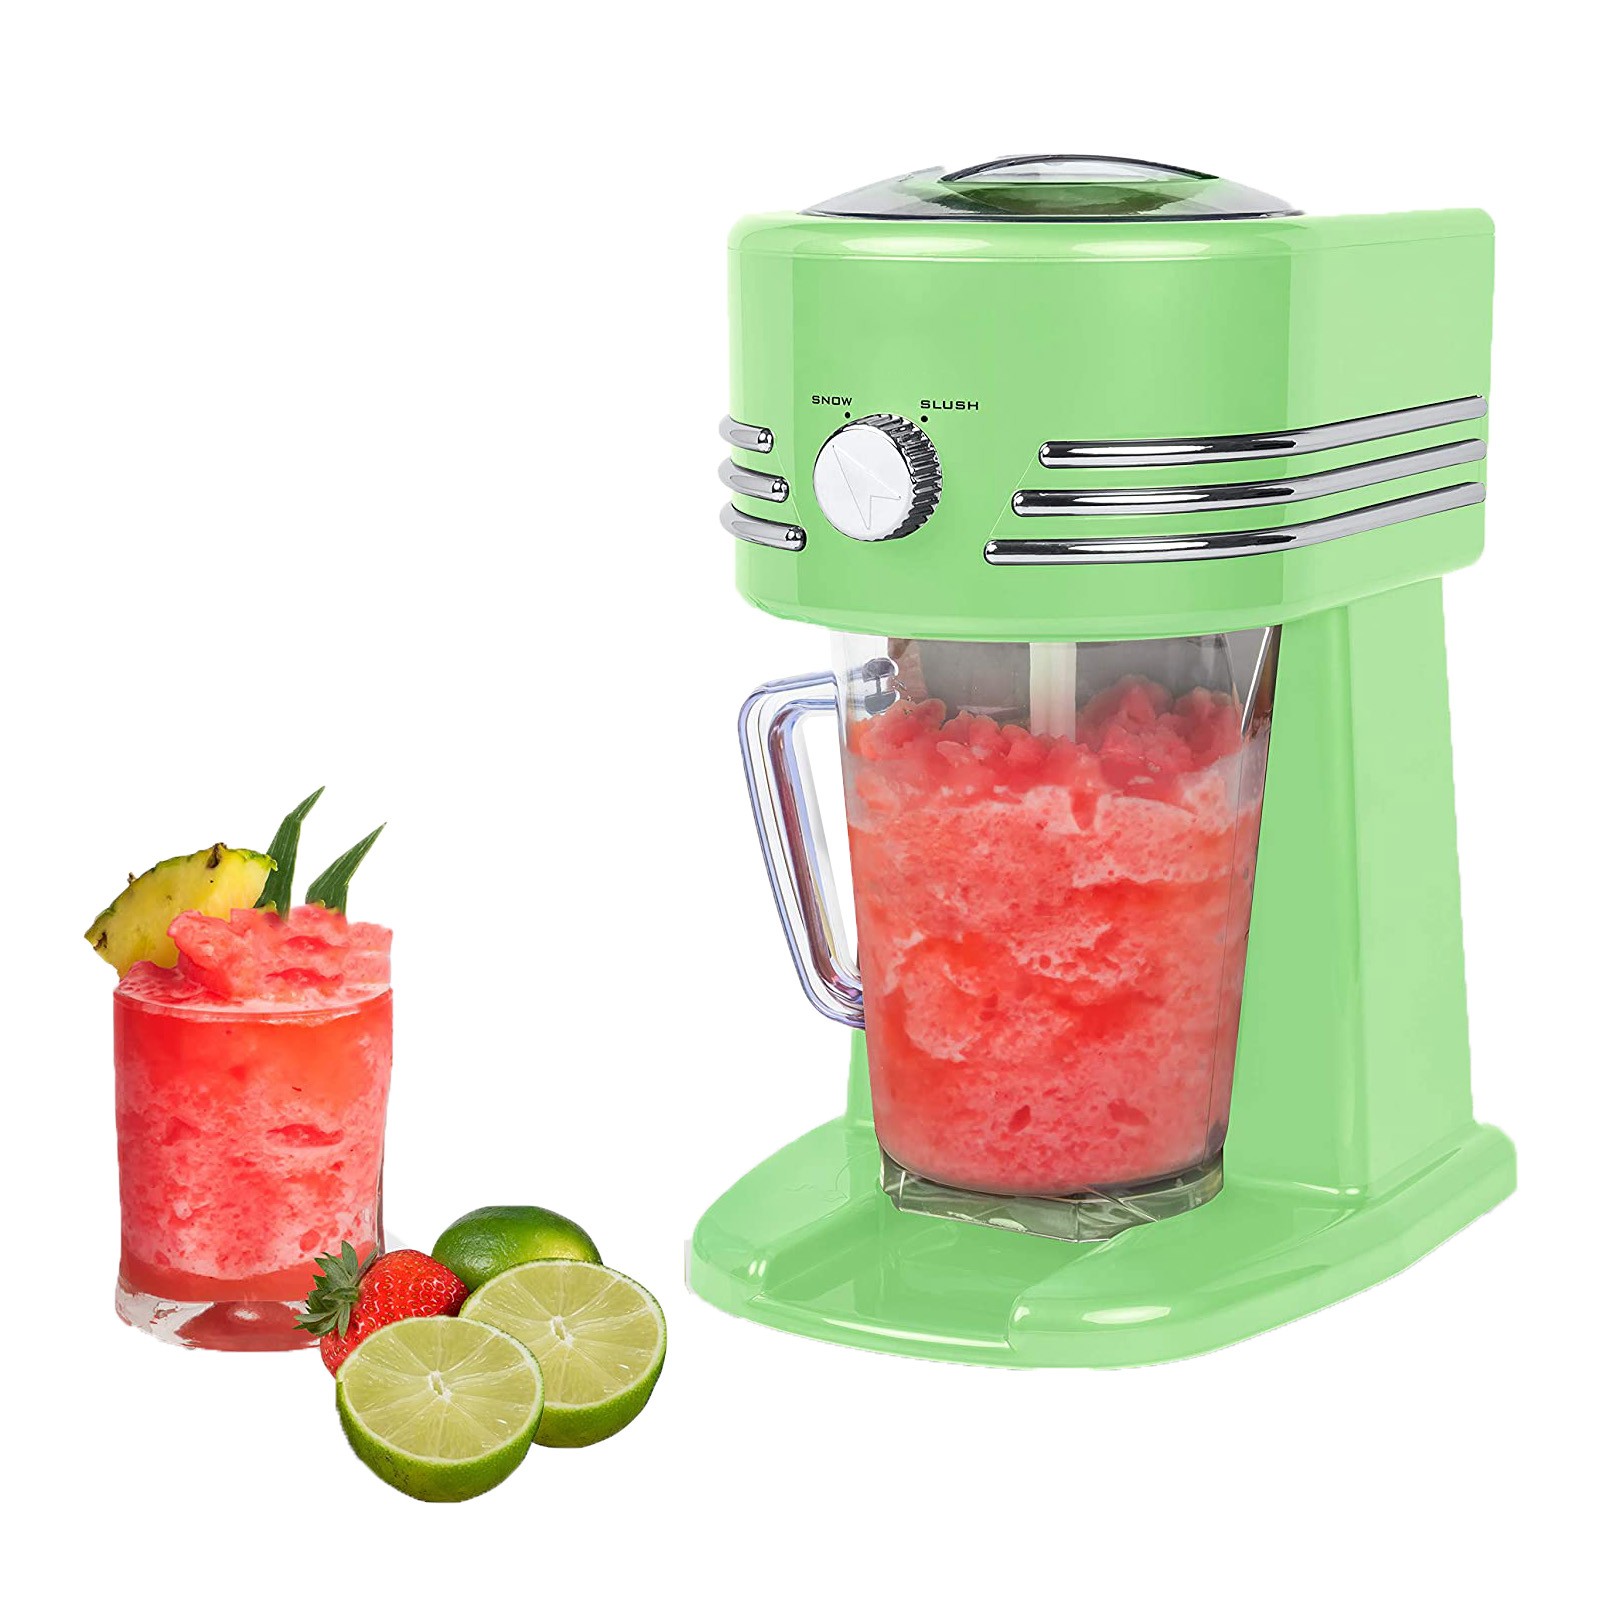 Countertop Frozen Beverage Station - for Slushie Daiquiris Margaritas & Snow Cones (Lime Green) -